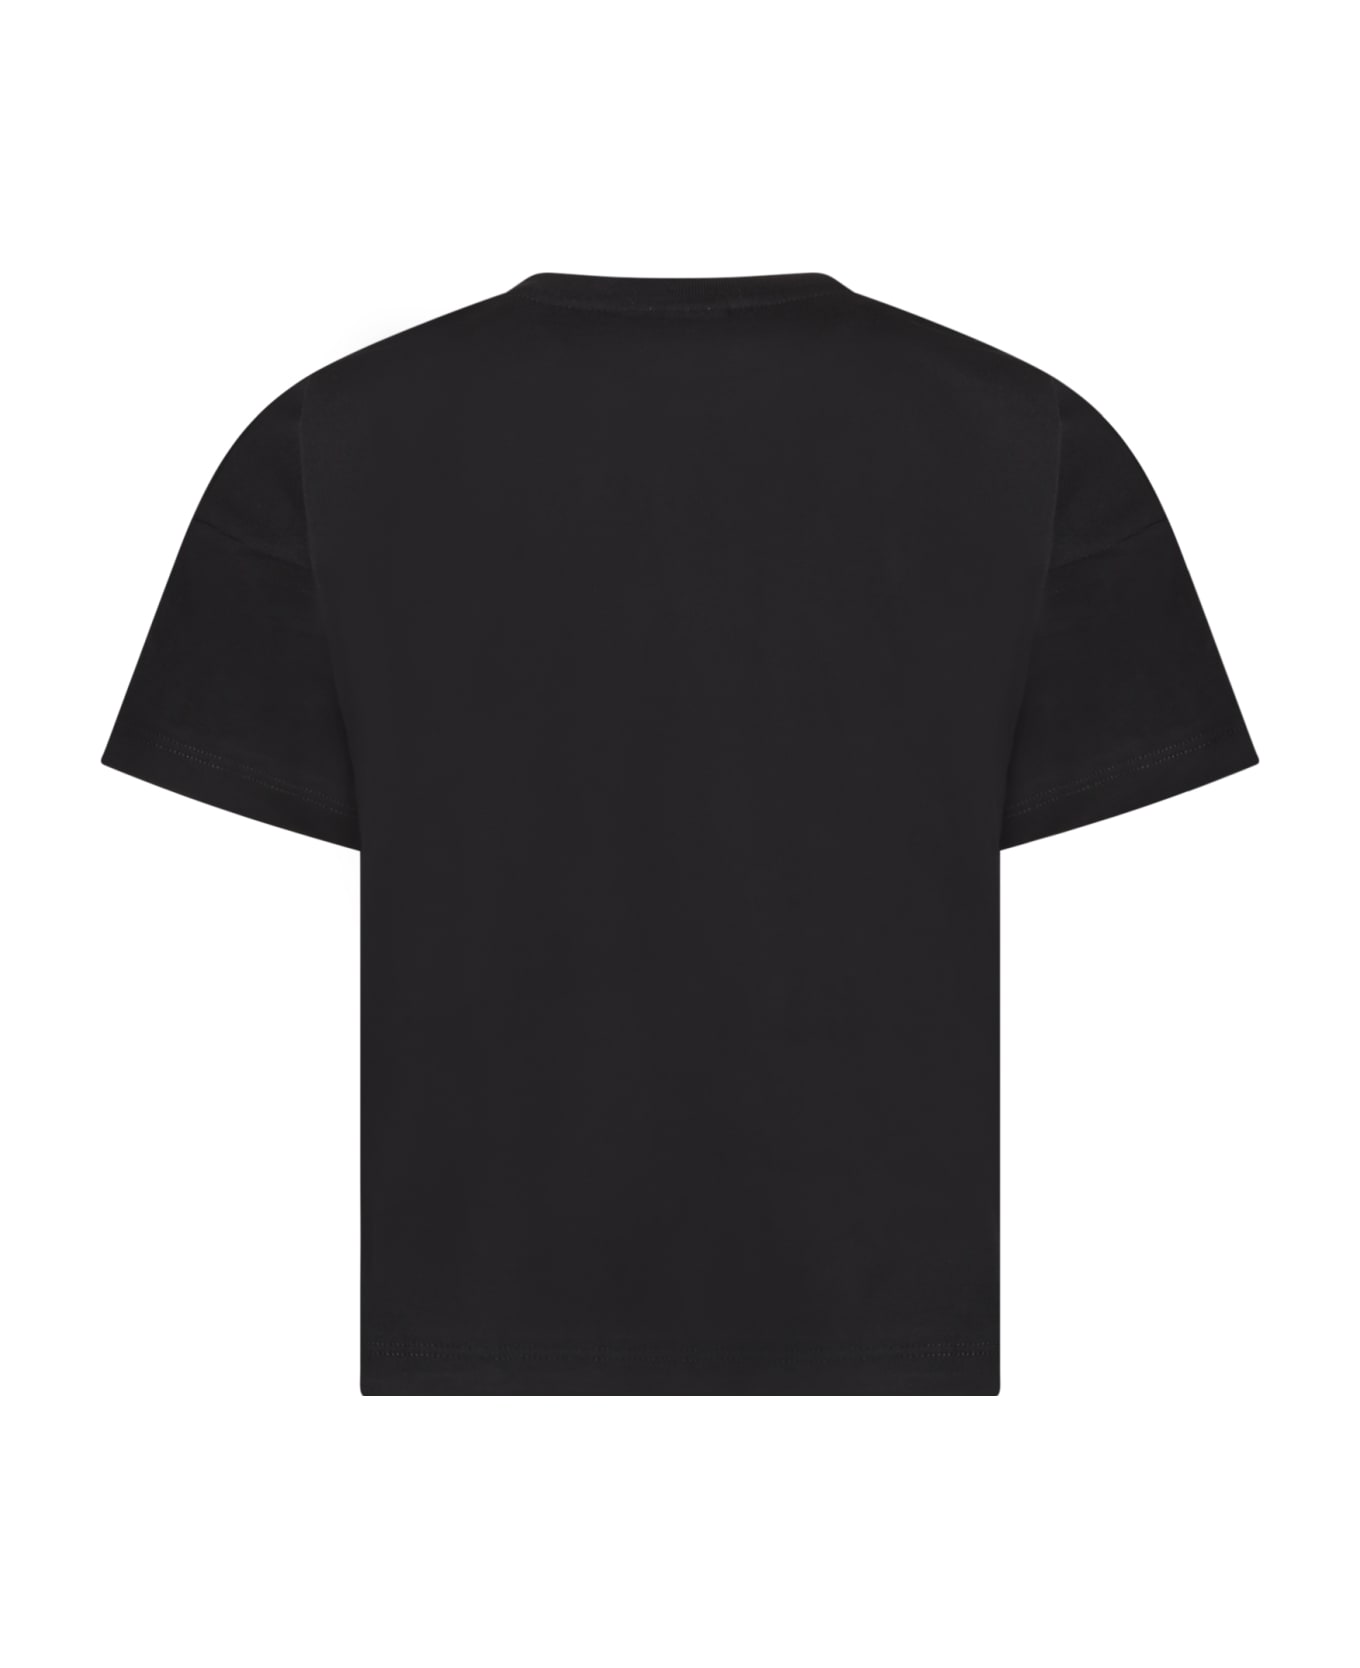 Marques'Almeida Black T-shirt For Girl With Black Logo - Black